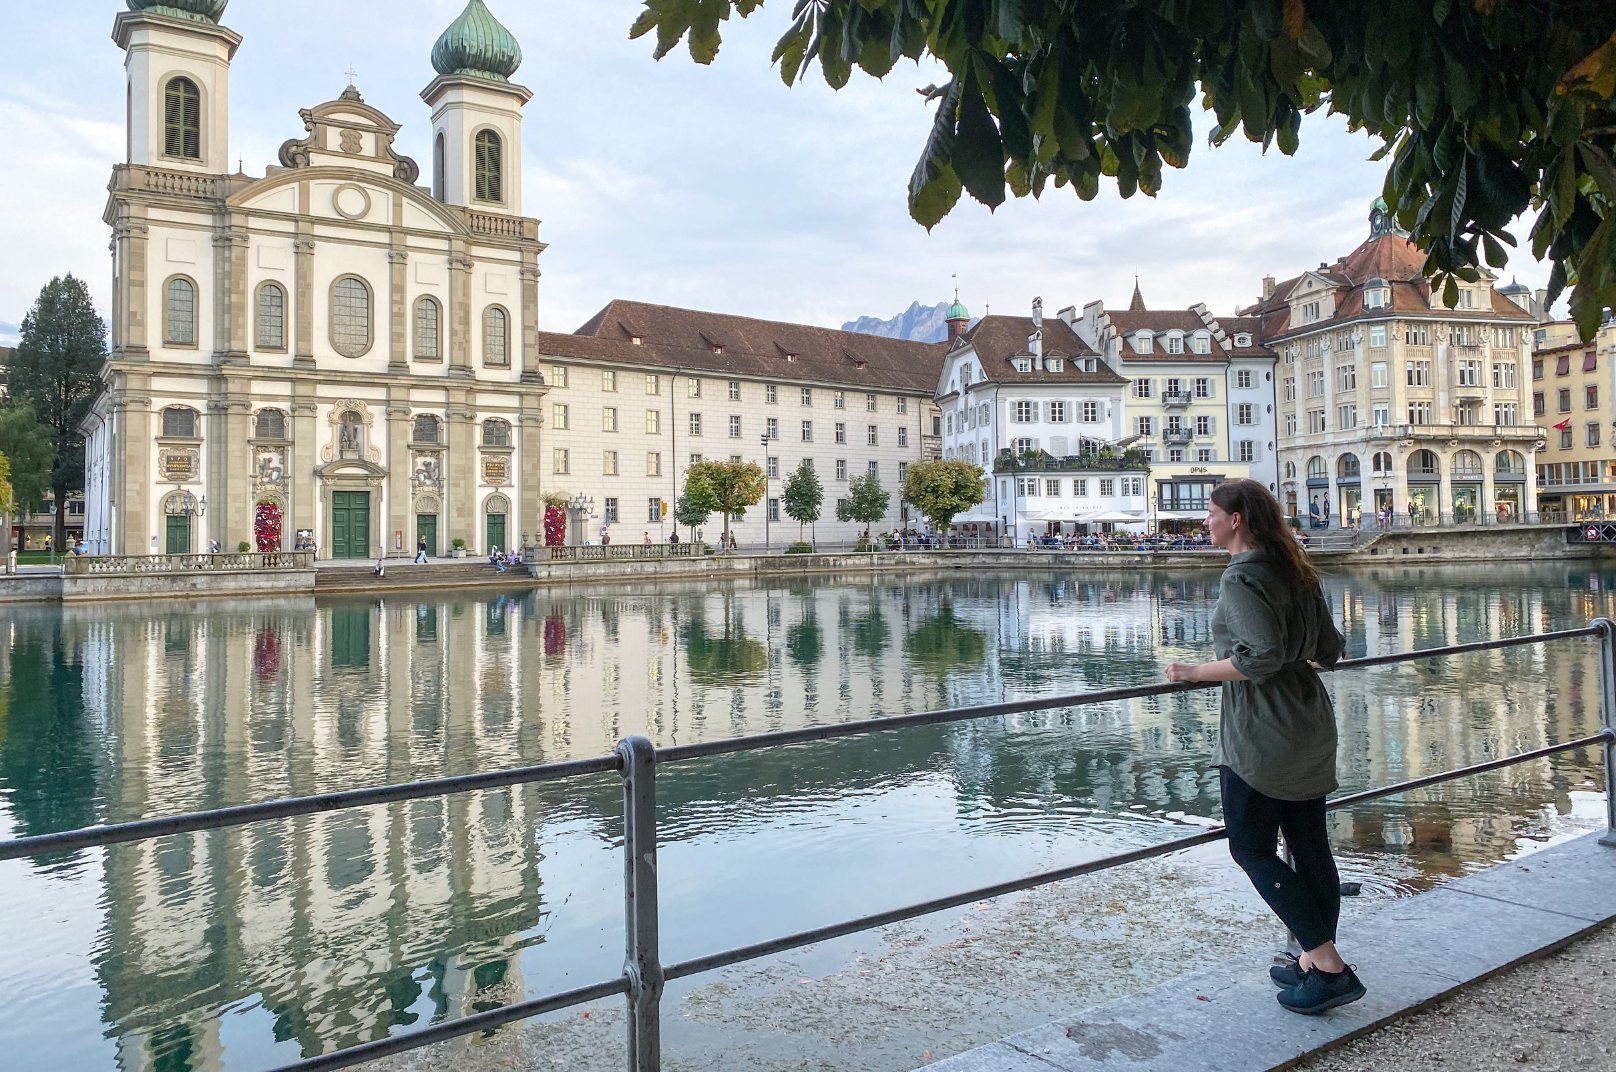 Lucerne city guide